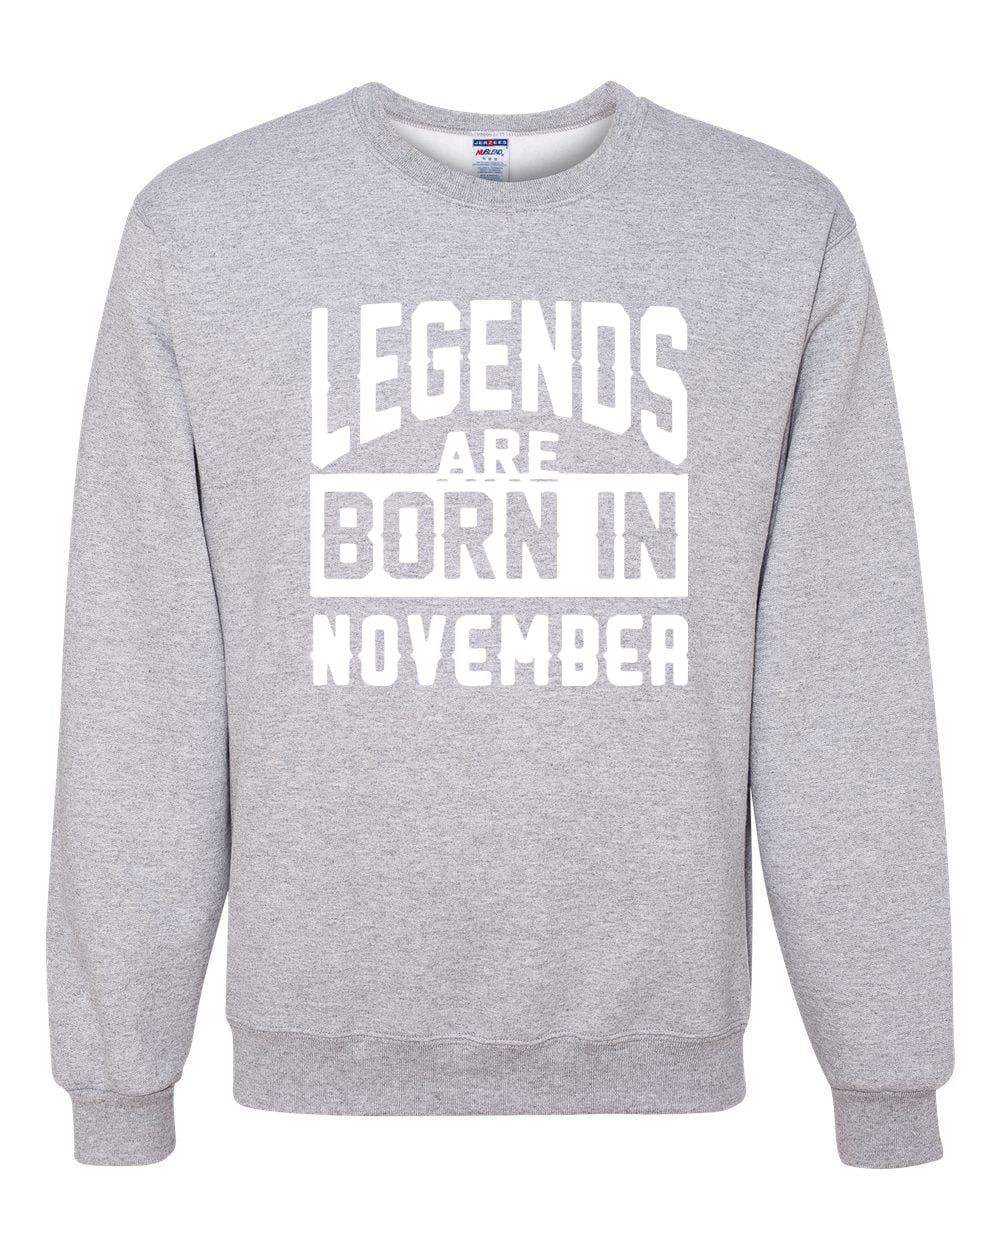 Gold Design Legends are Born in June Mens Crewneck Graphic Sweatshirt 